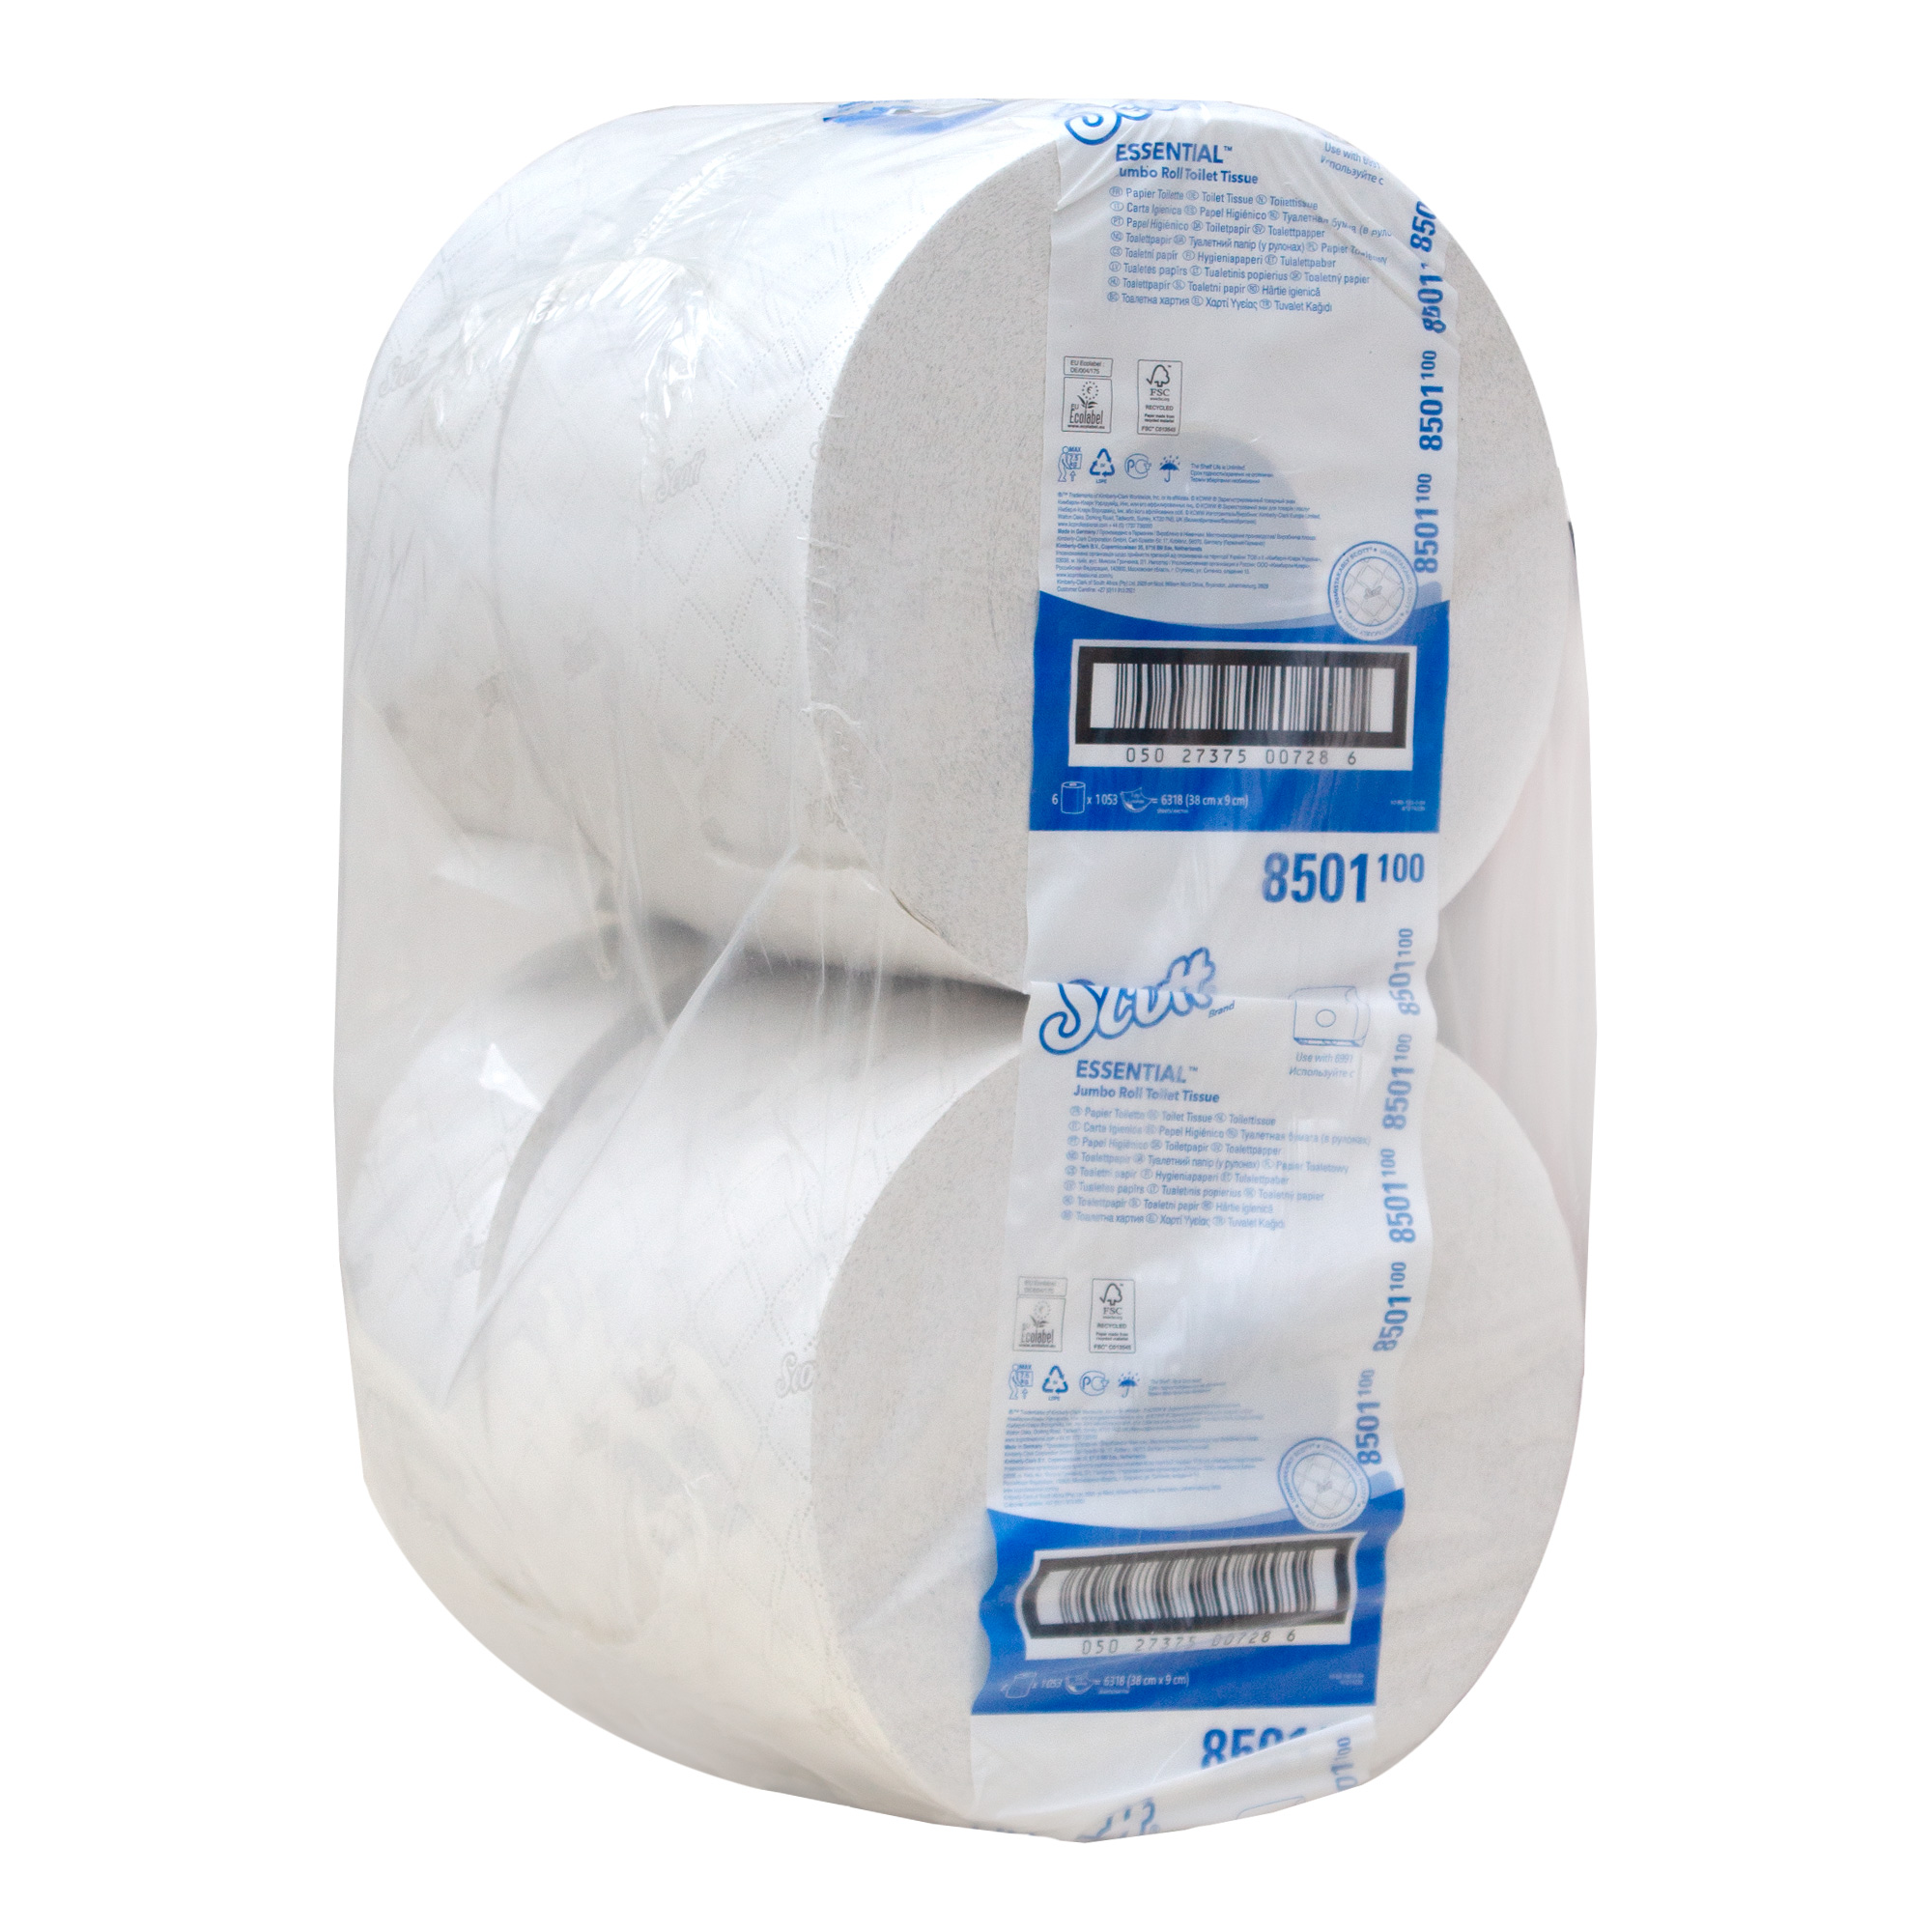 Scott Essential 8501 Toilettenpapier Jumbo Großrolle Recycling, weiß, 2-lagig, 1053 Blatt